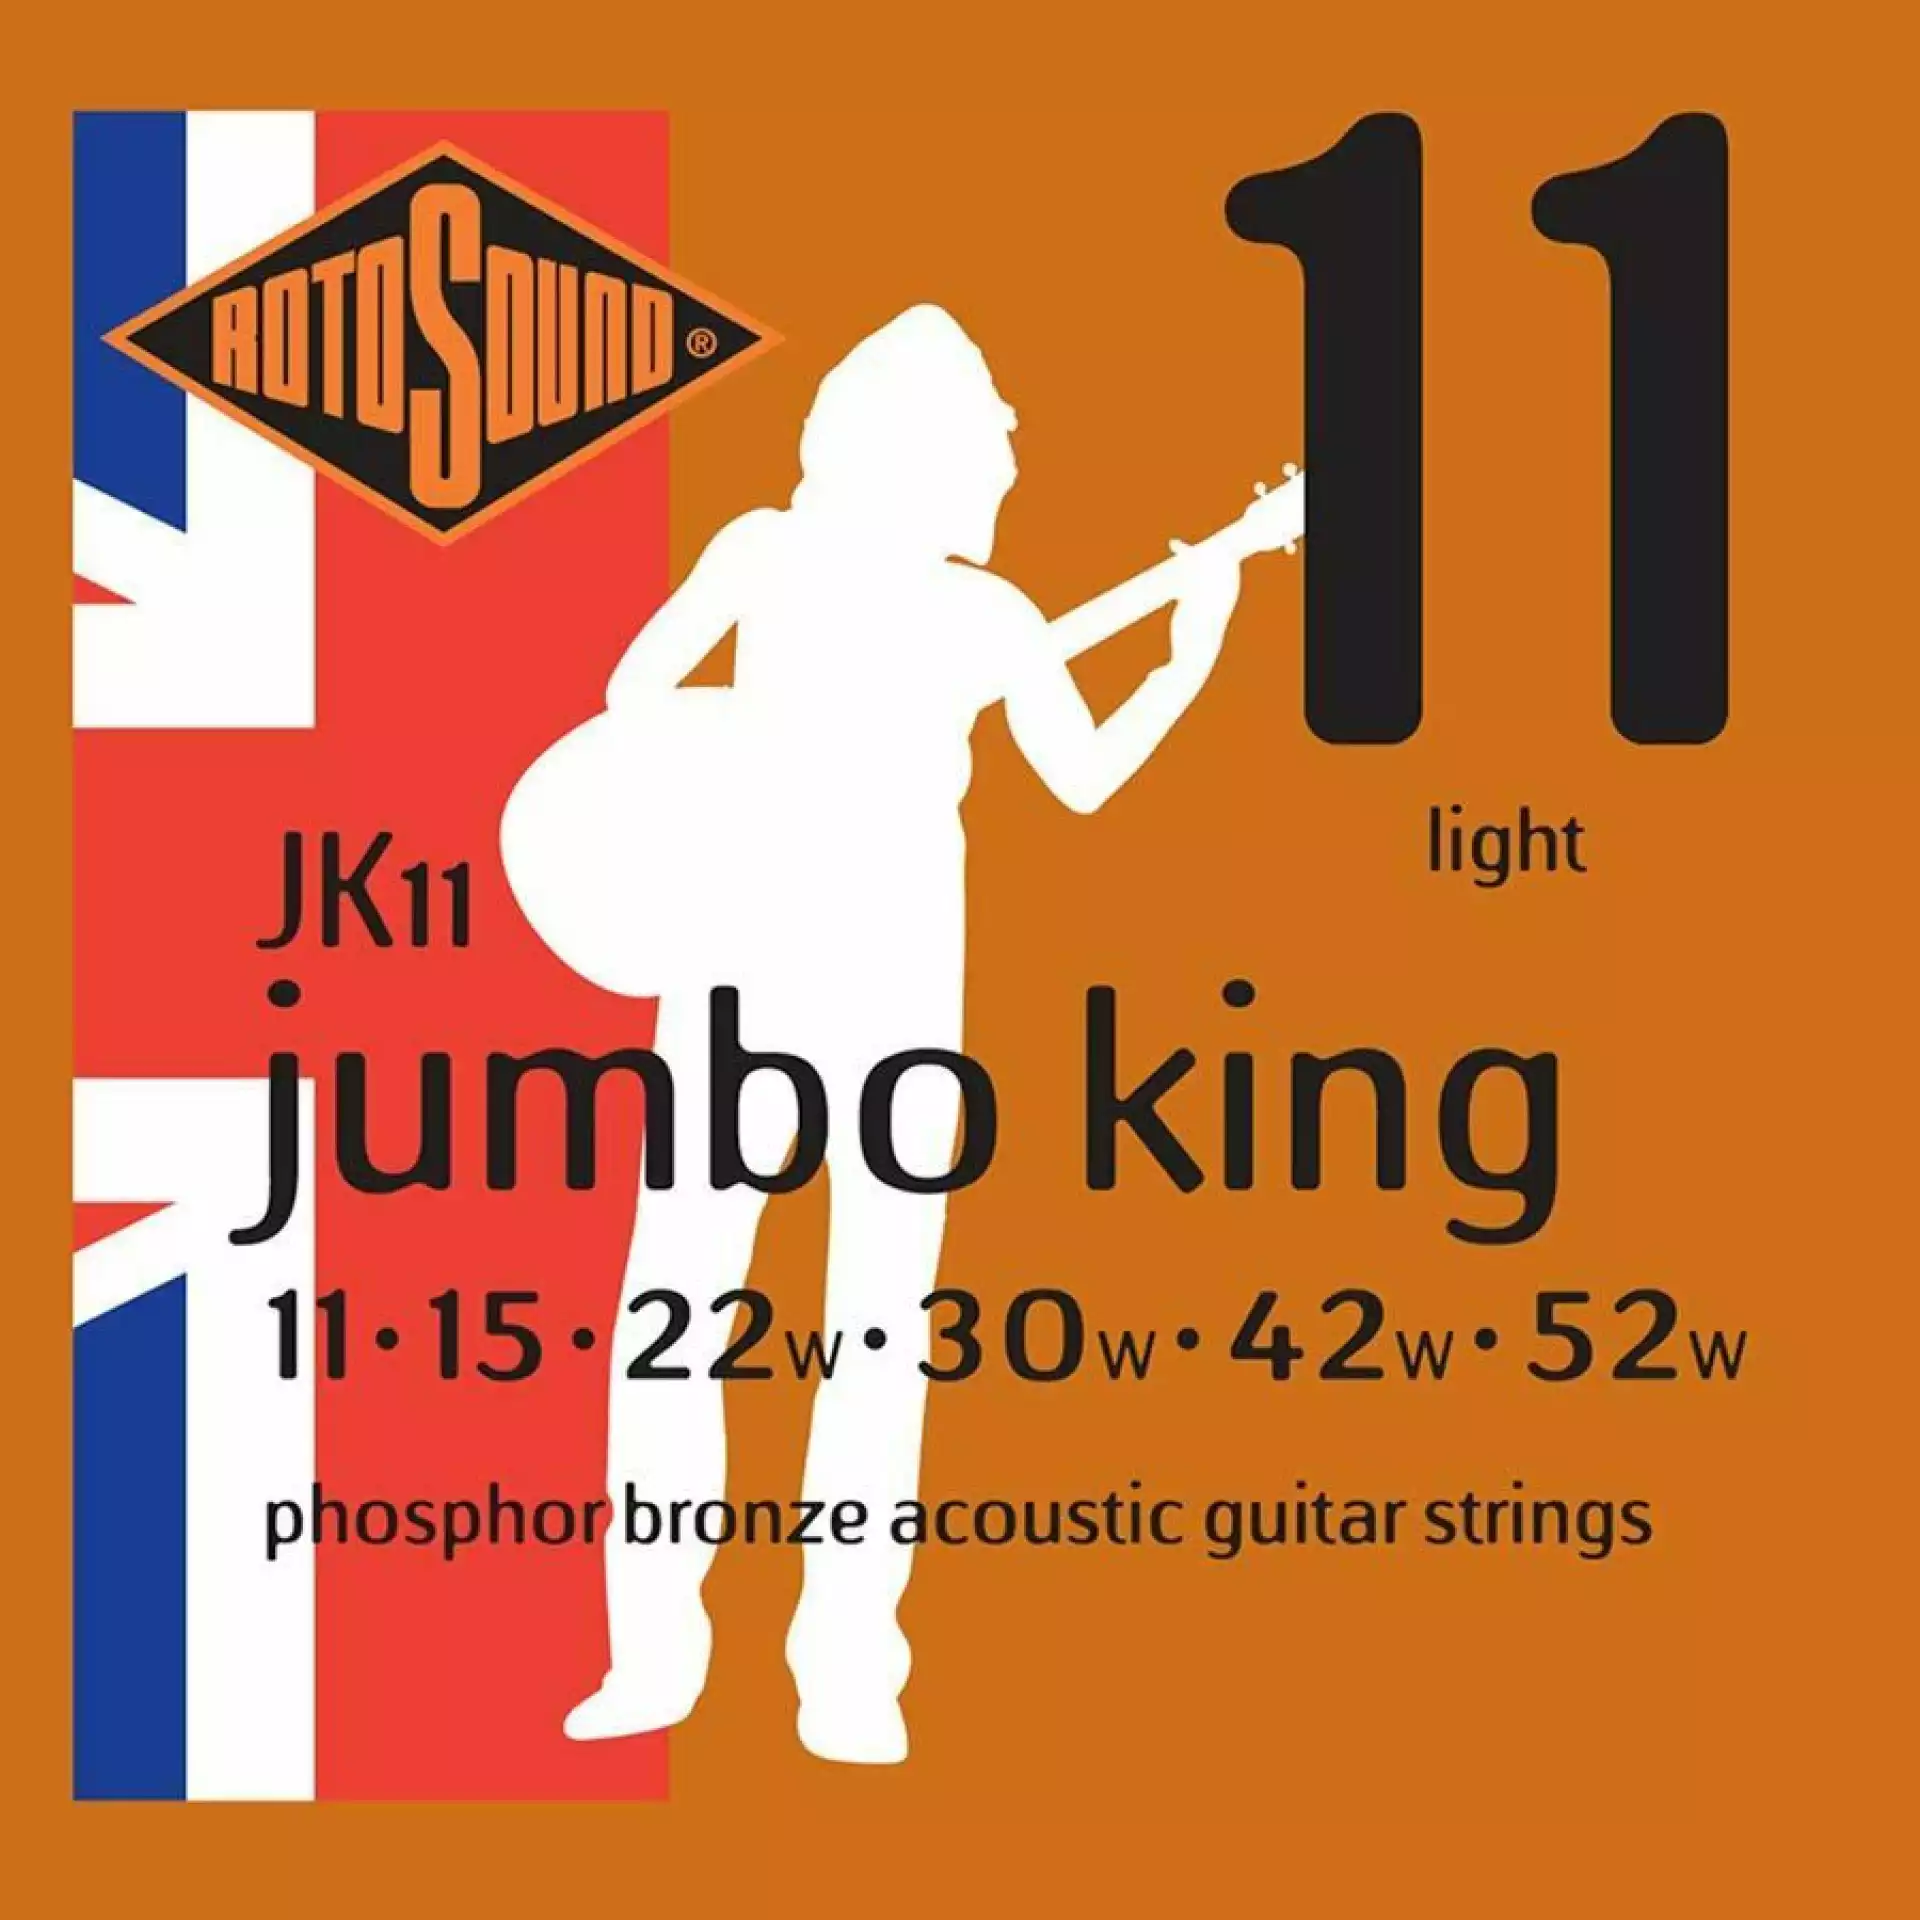 ROTOSOUND JUMBO KING JK11